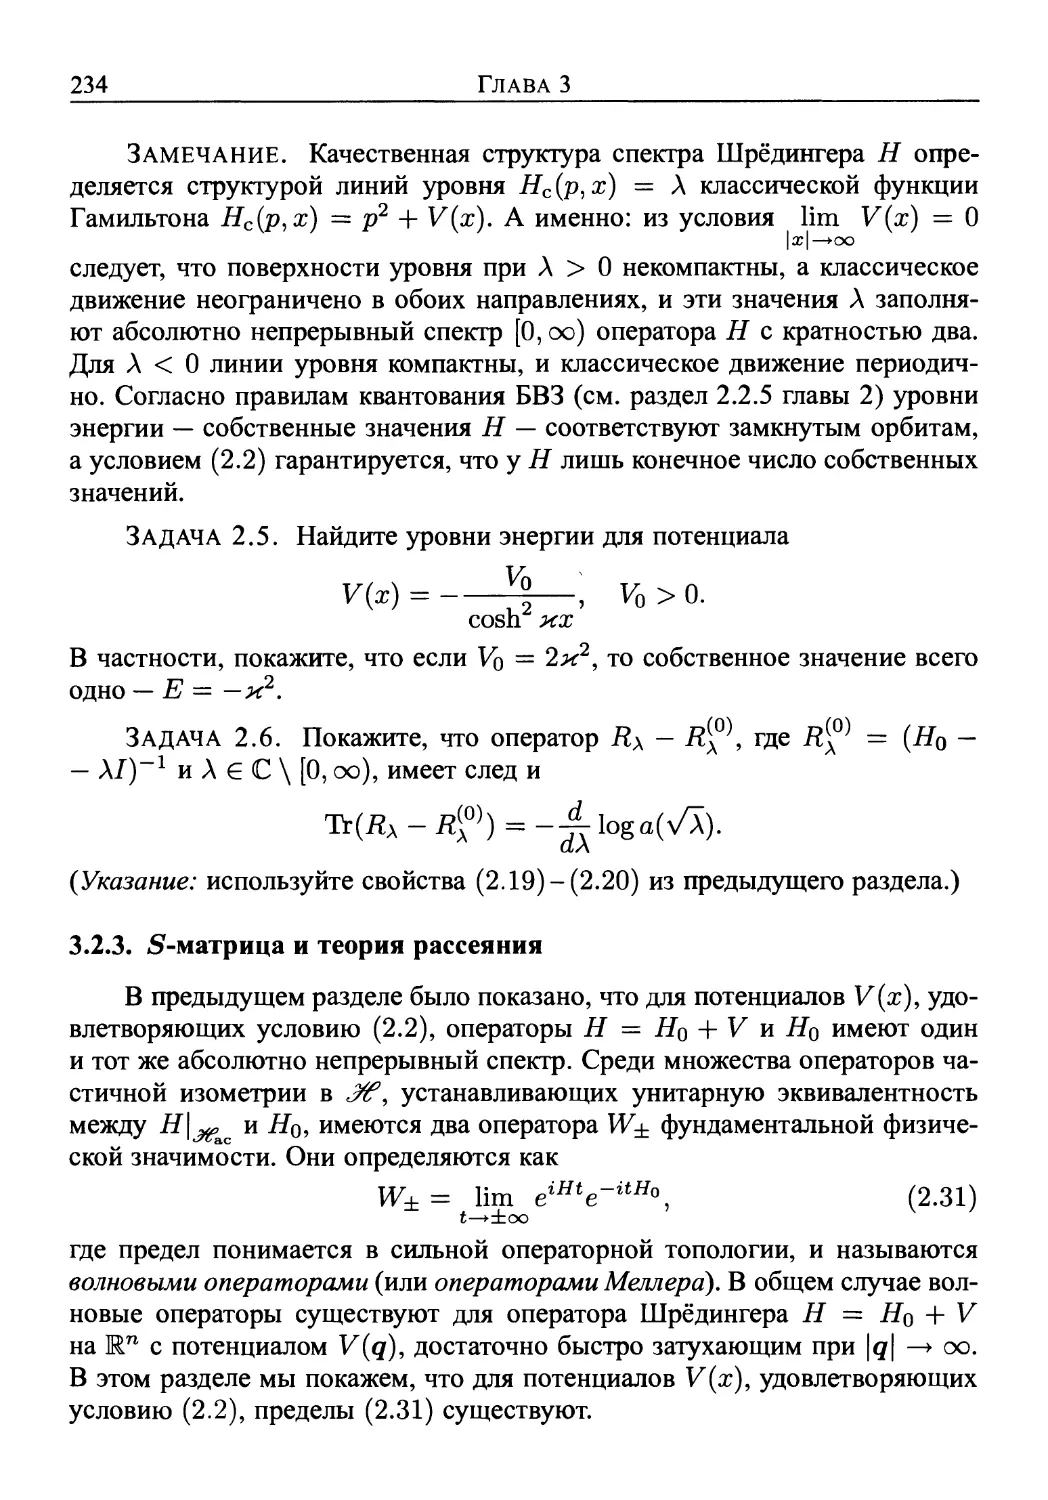 3.2.3. 5-матрица и теория рассеяния